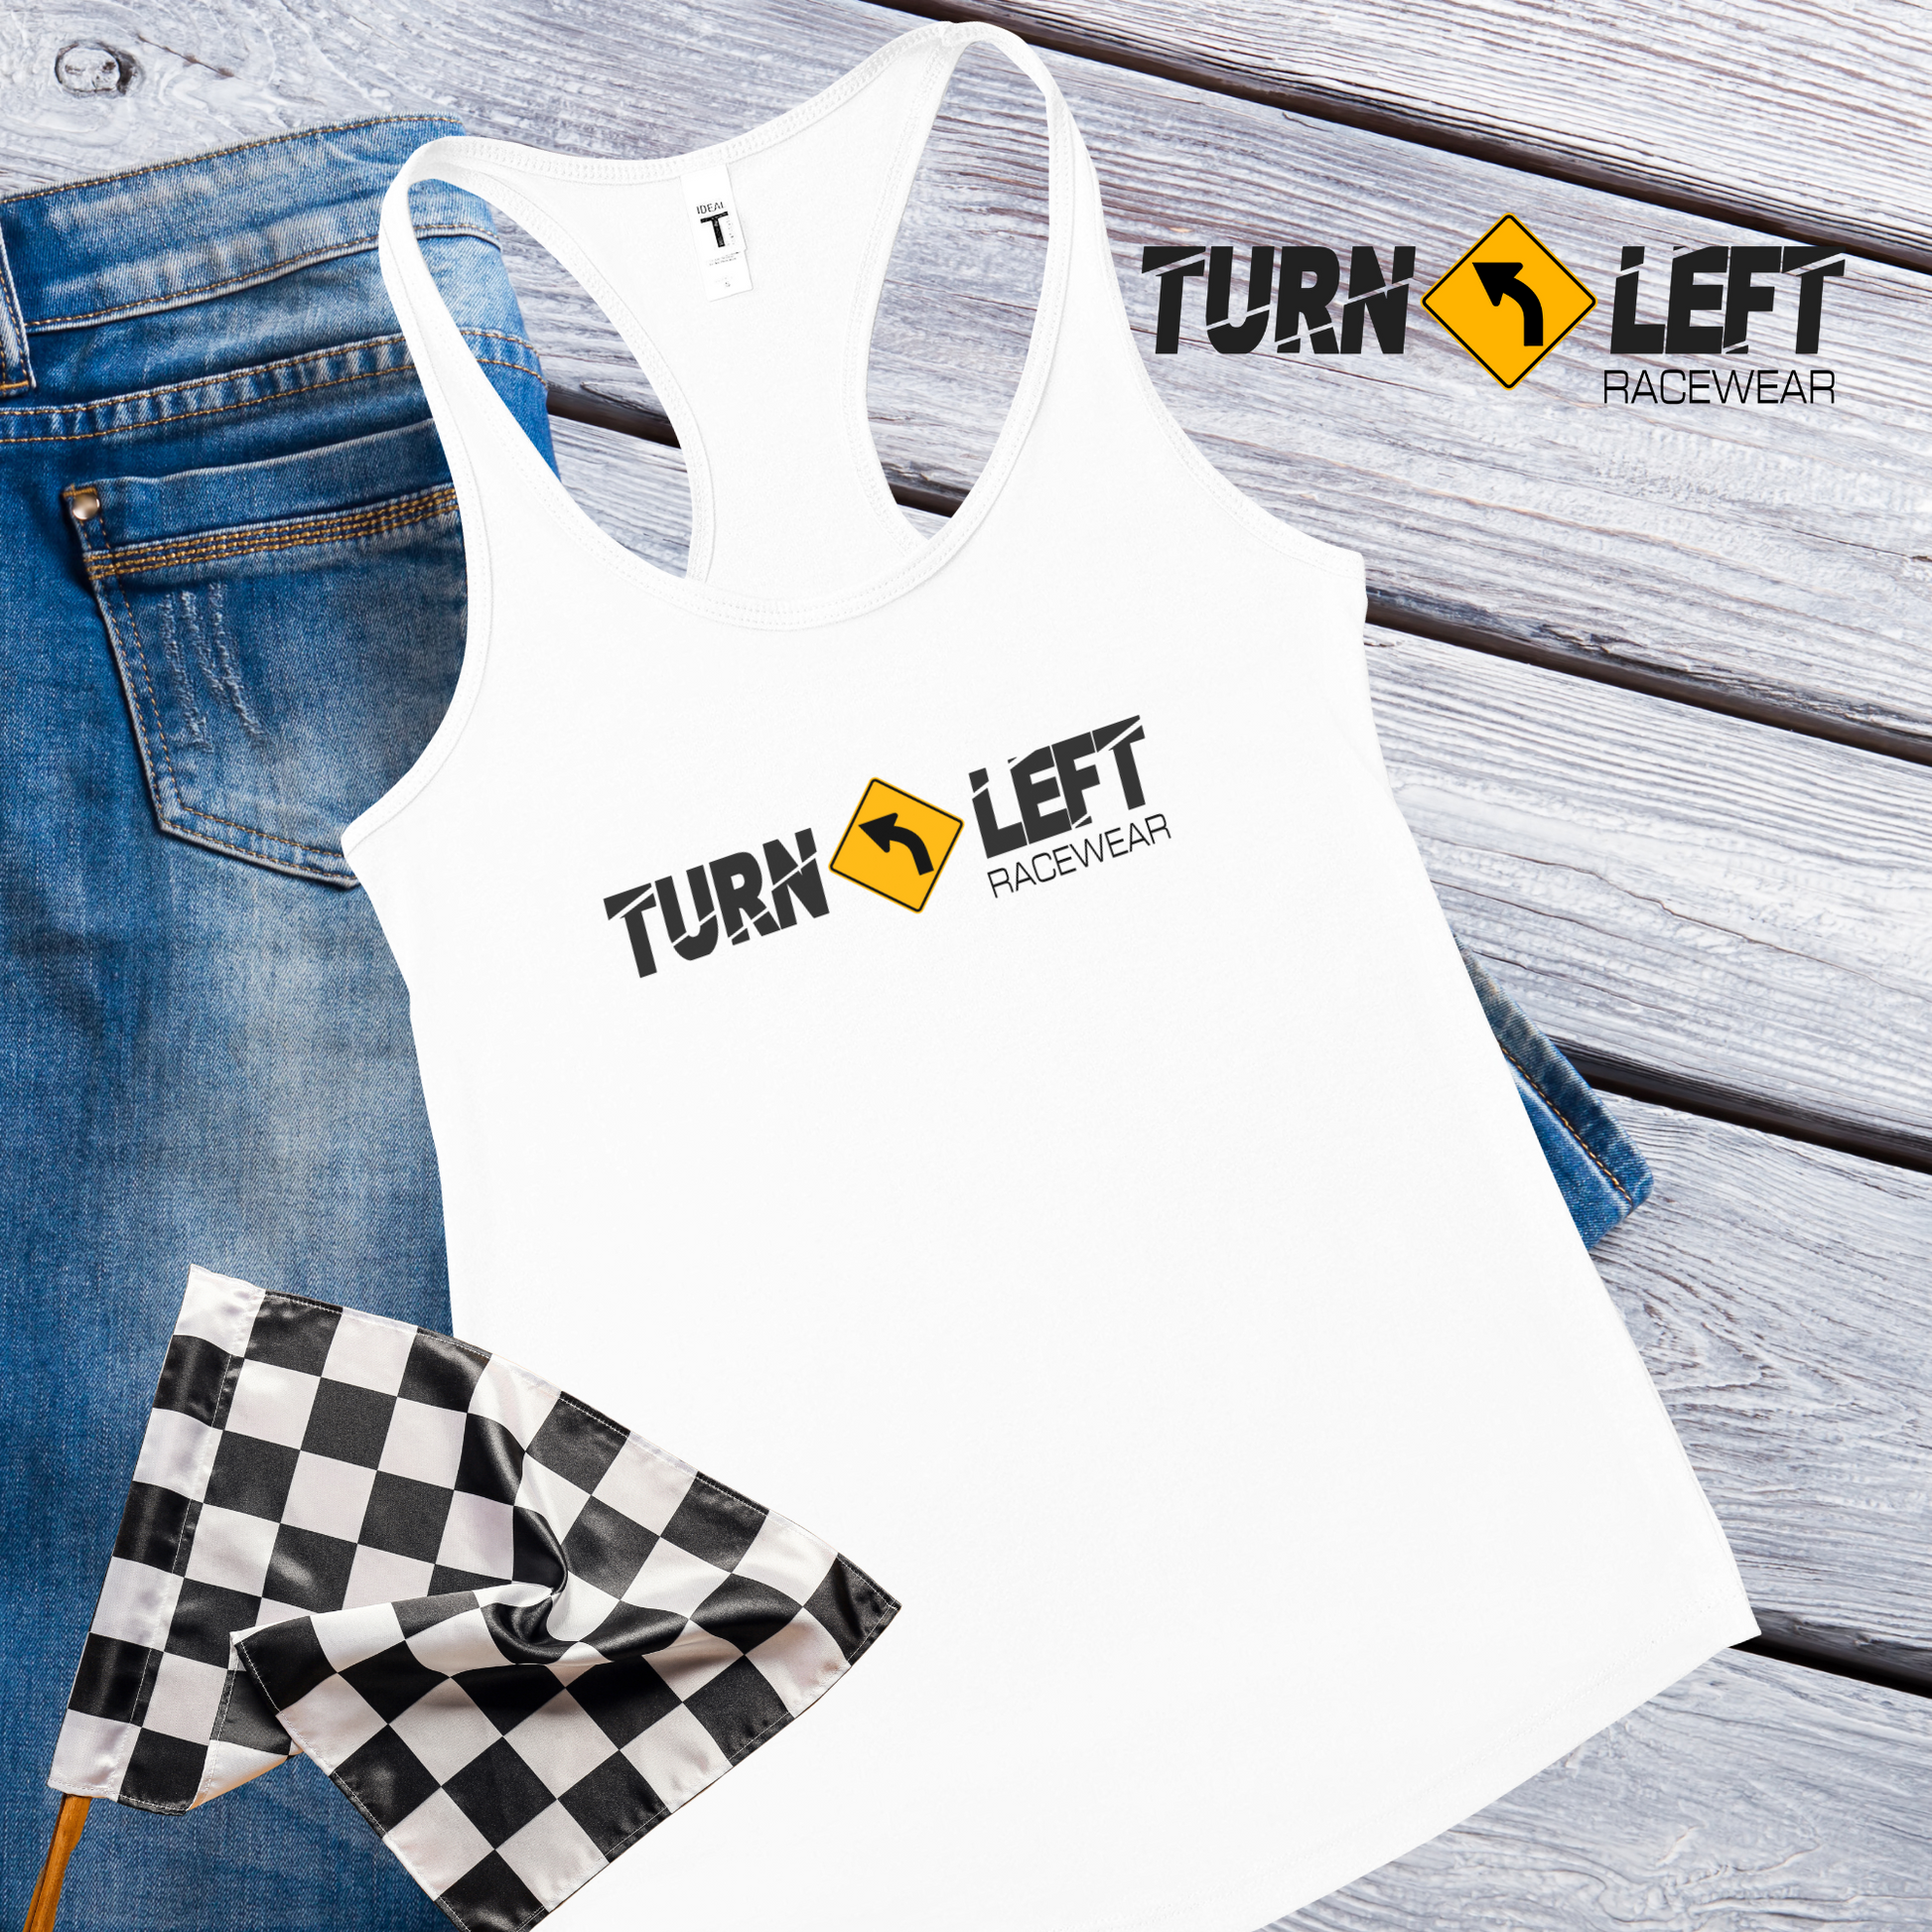 Turn Left Racing Logo Tank Top